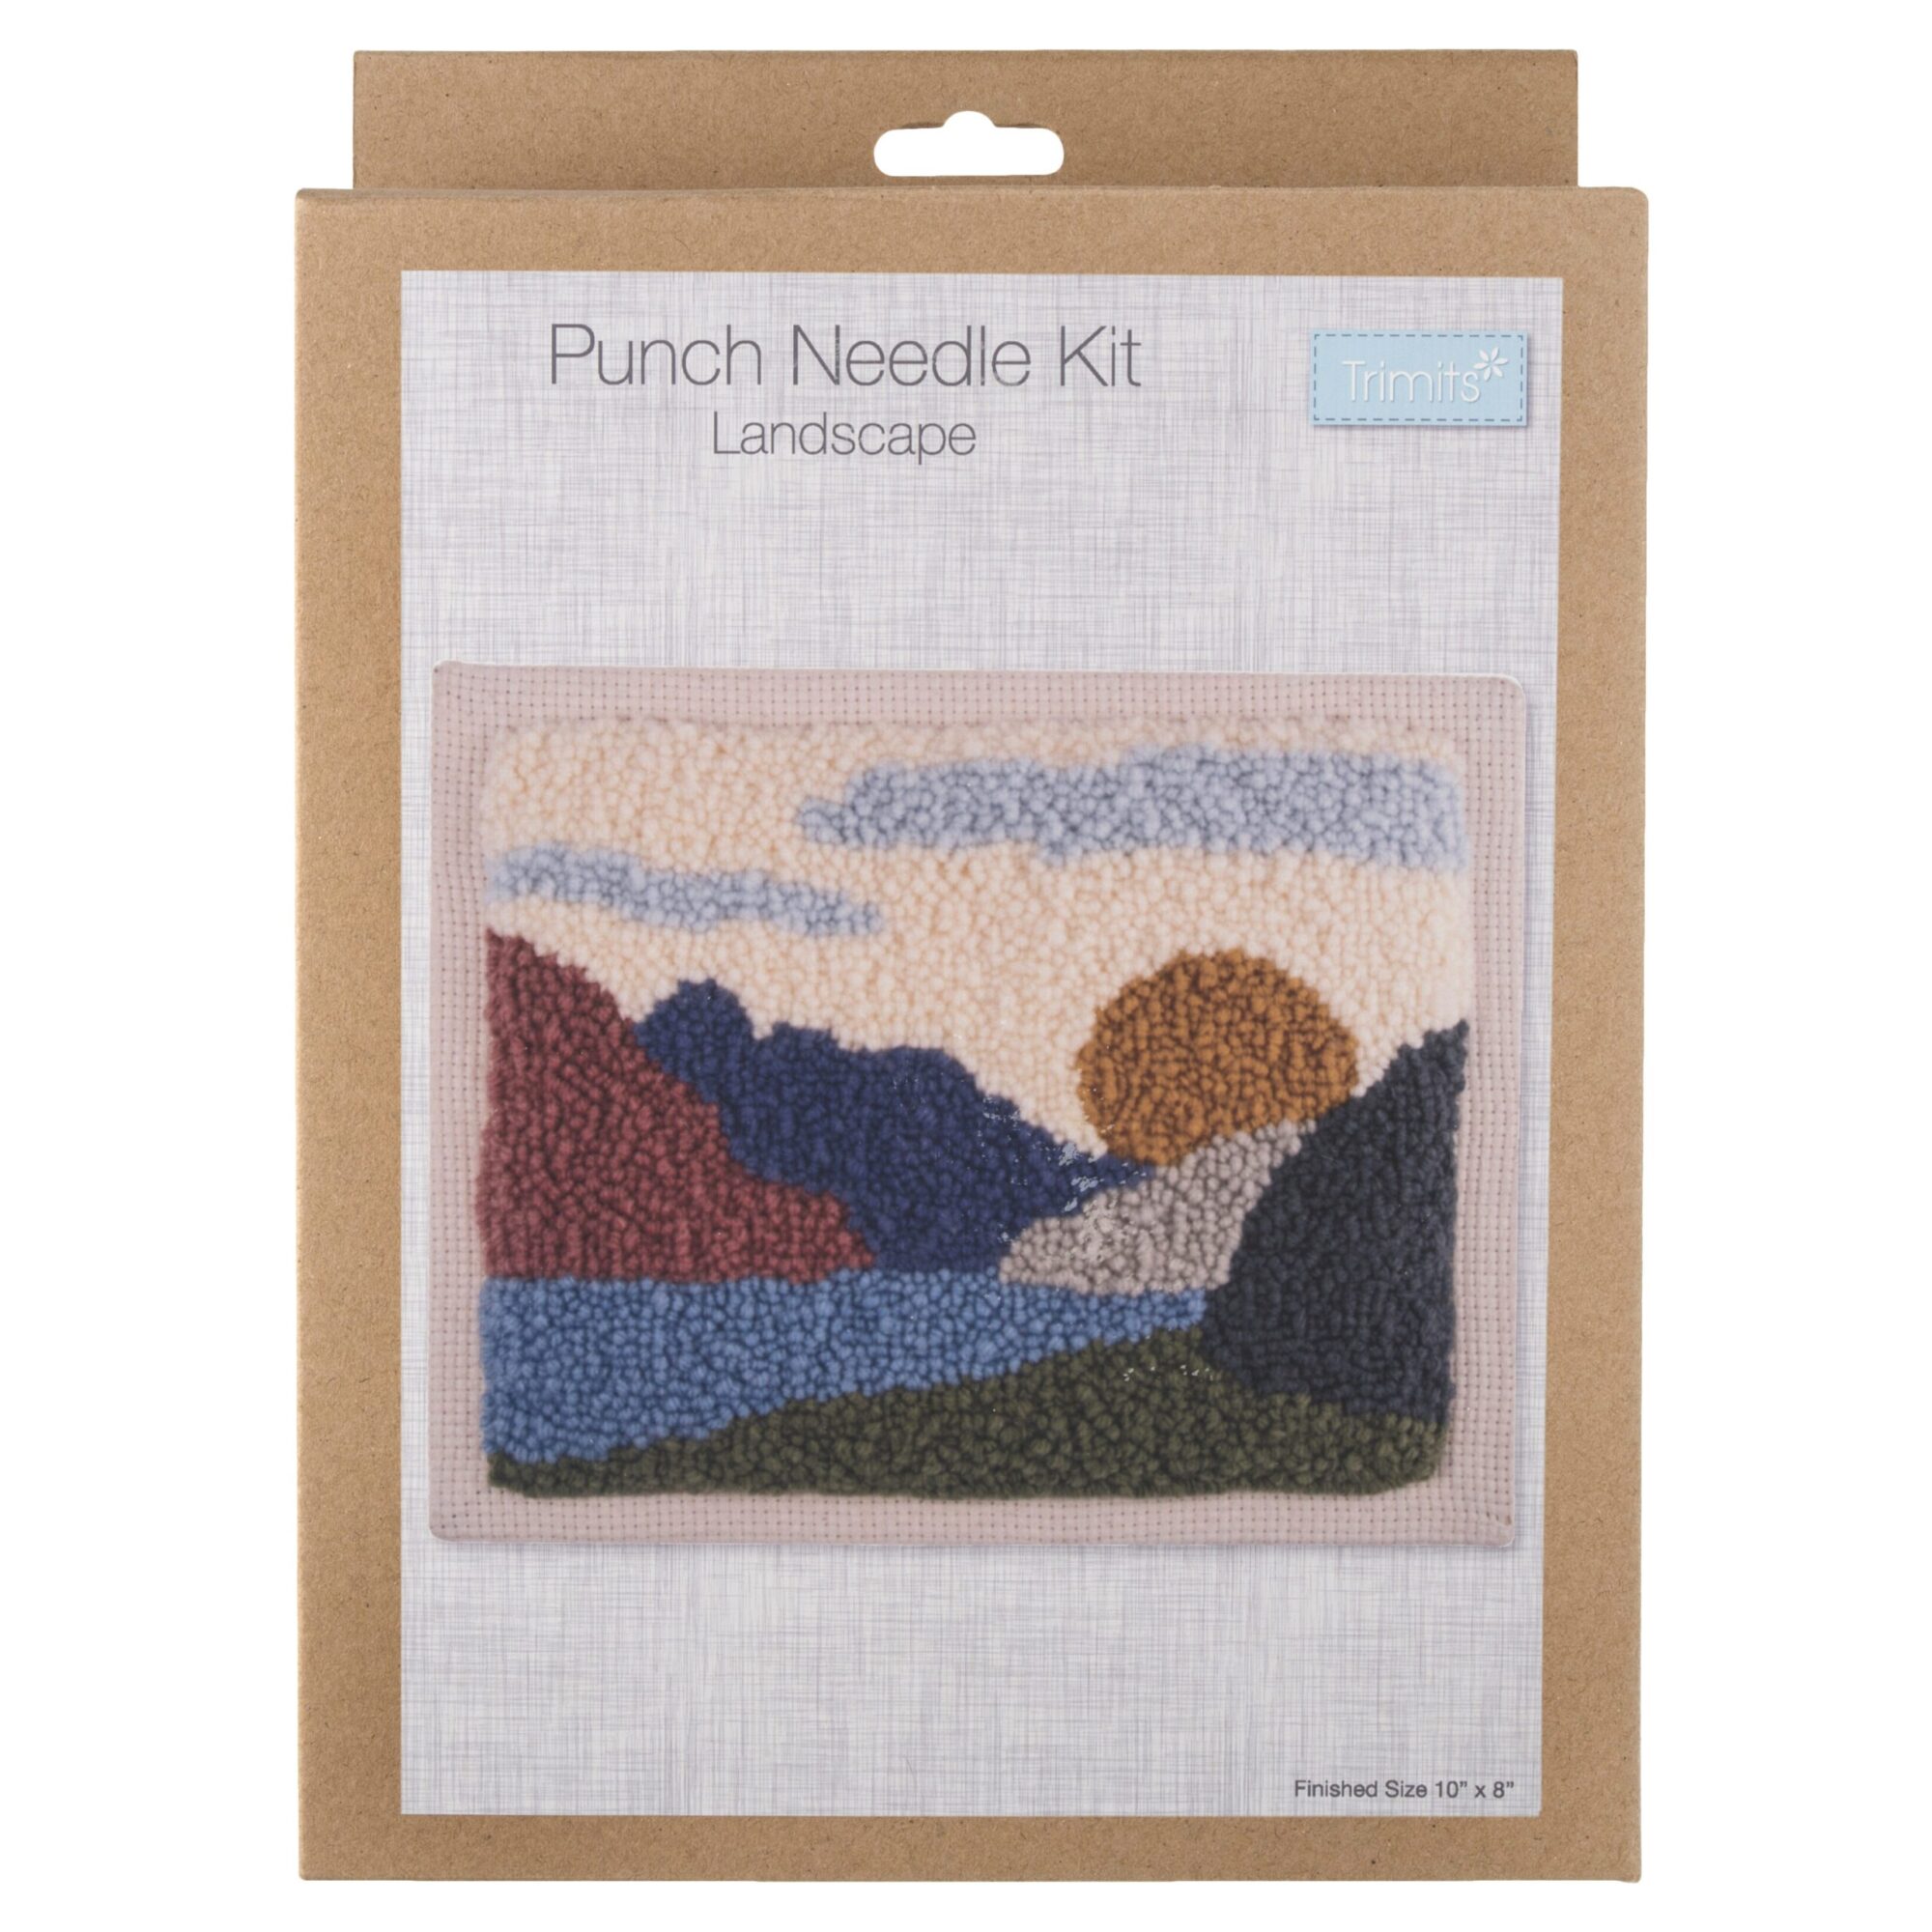 Trimits Punch Needle Kit - Landscape product image